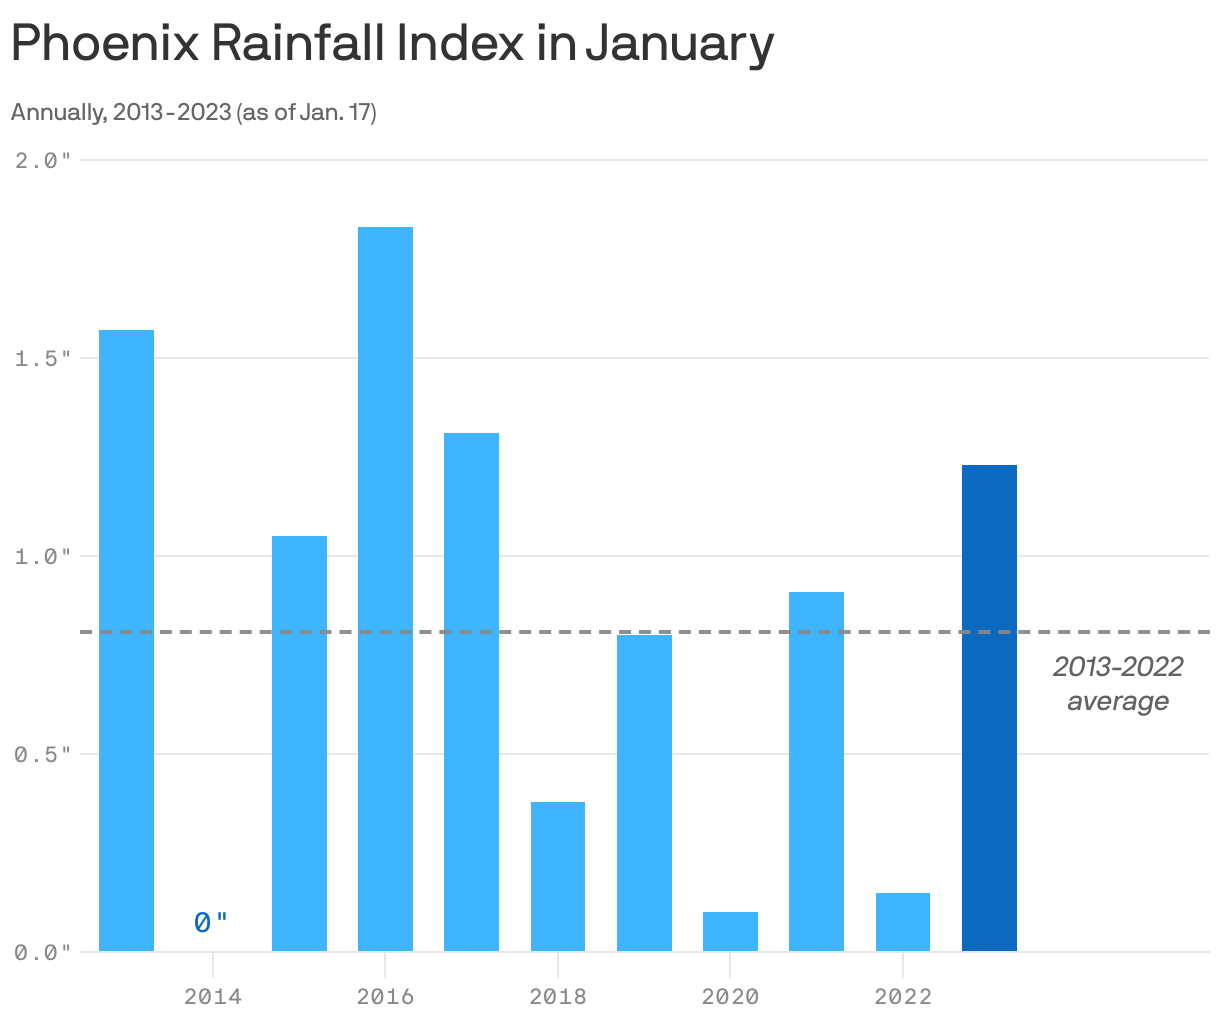 Phoenix Rainfall Index in January